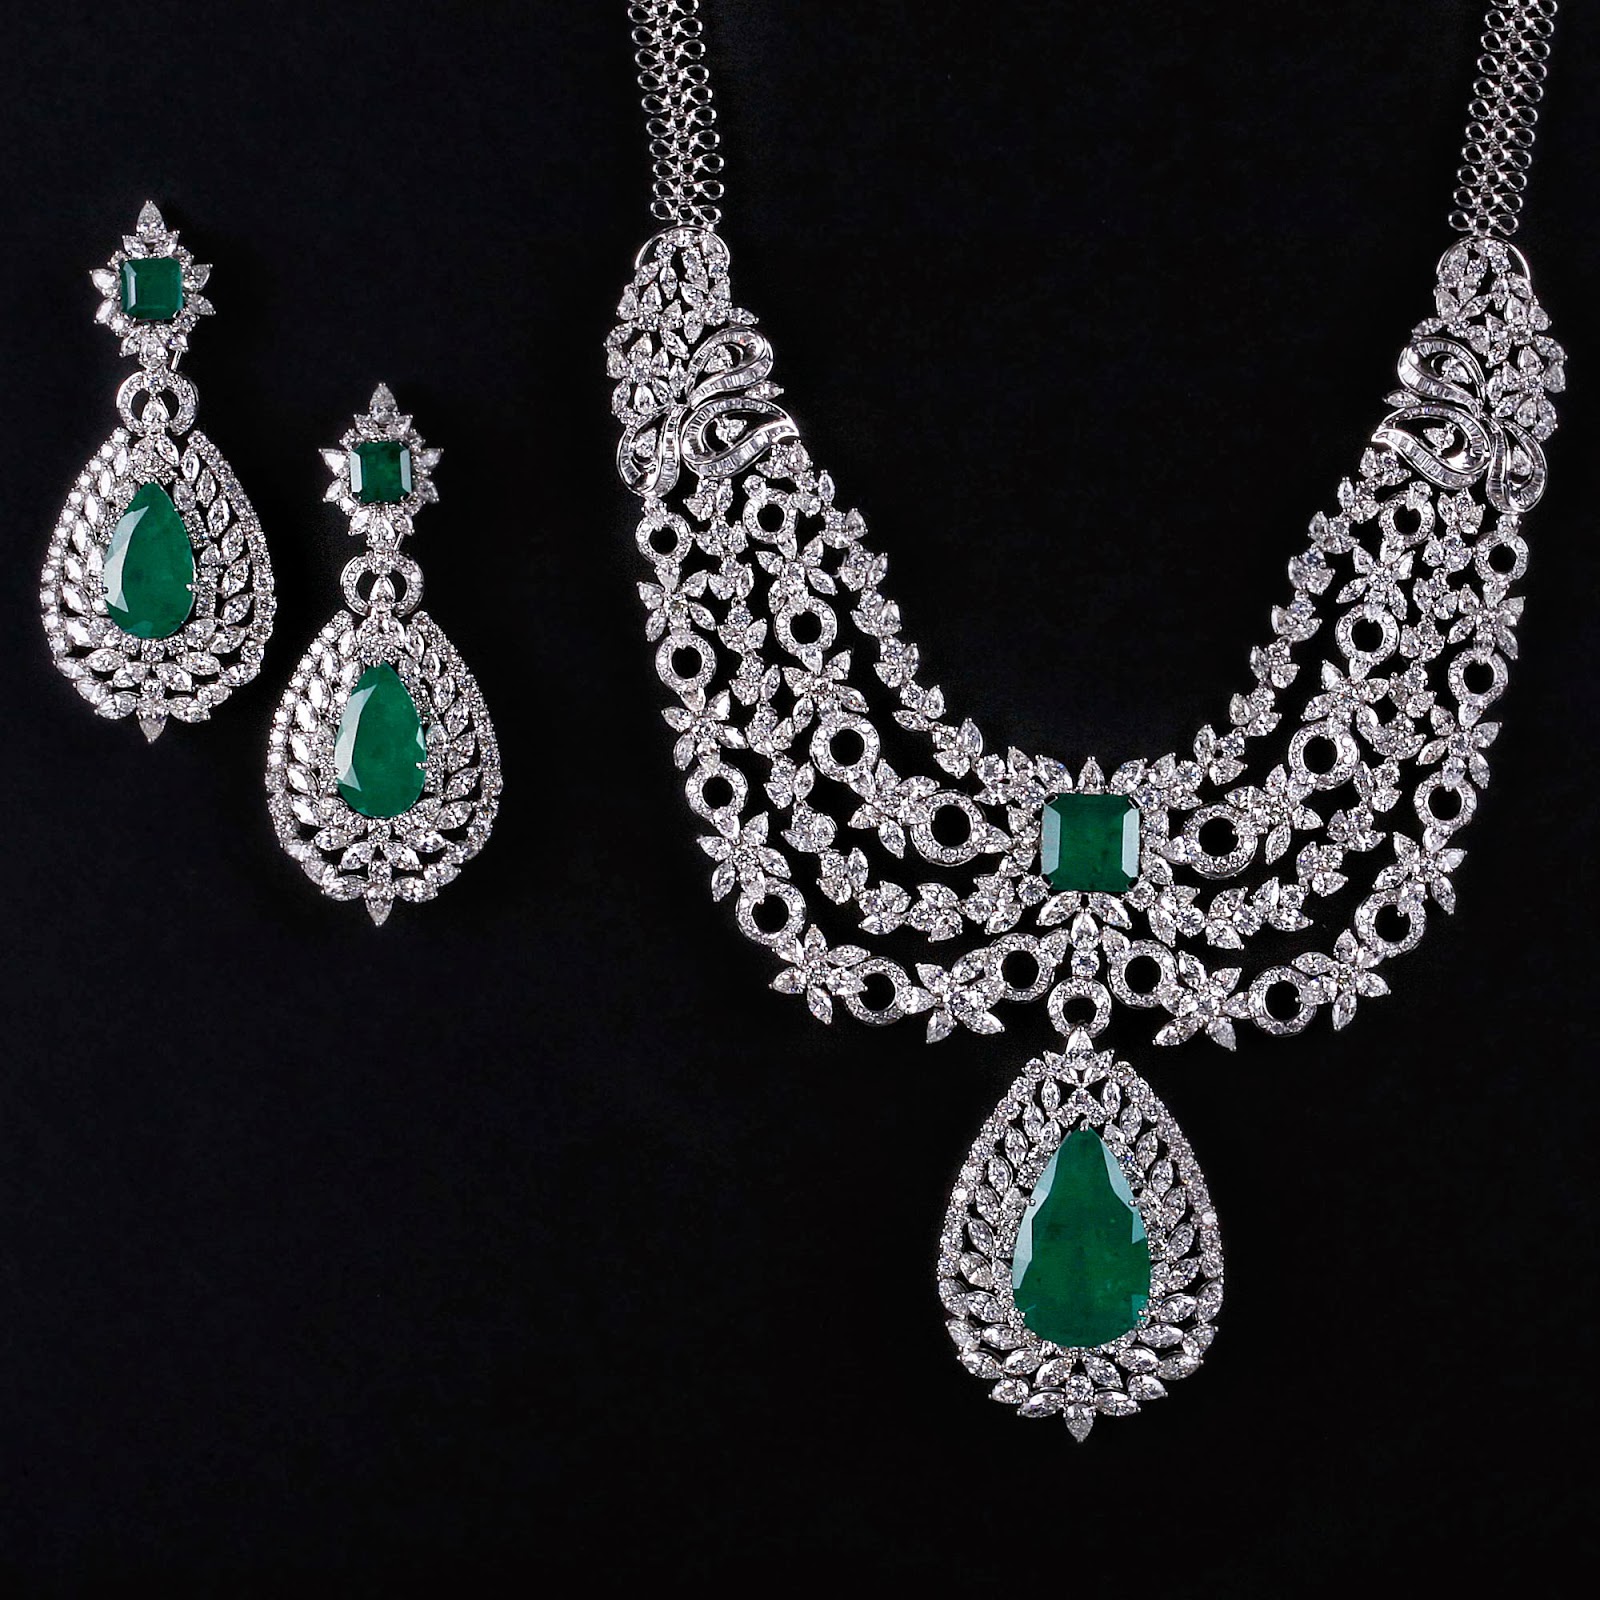 PC Jeweller - Diamond, Gold, Wedding Jewellery: January 2014